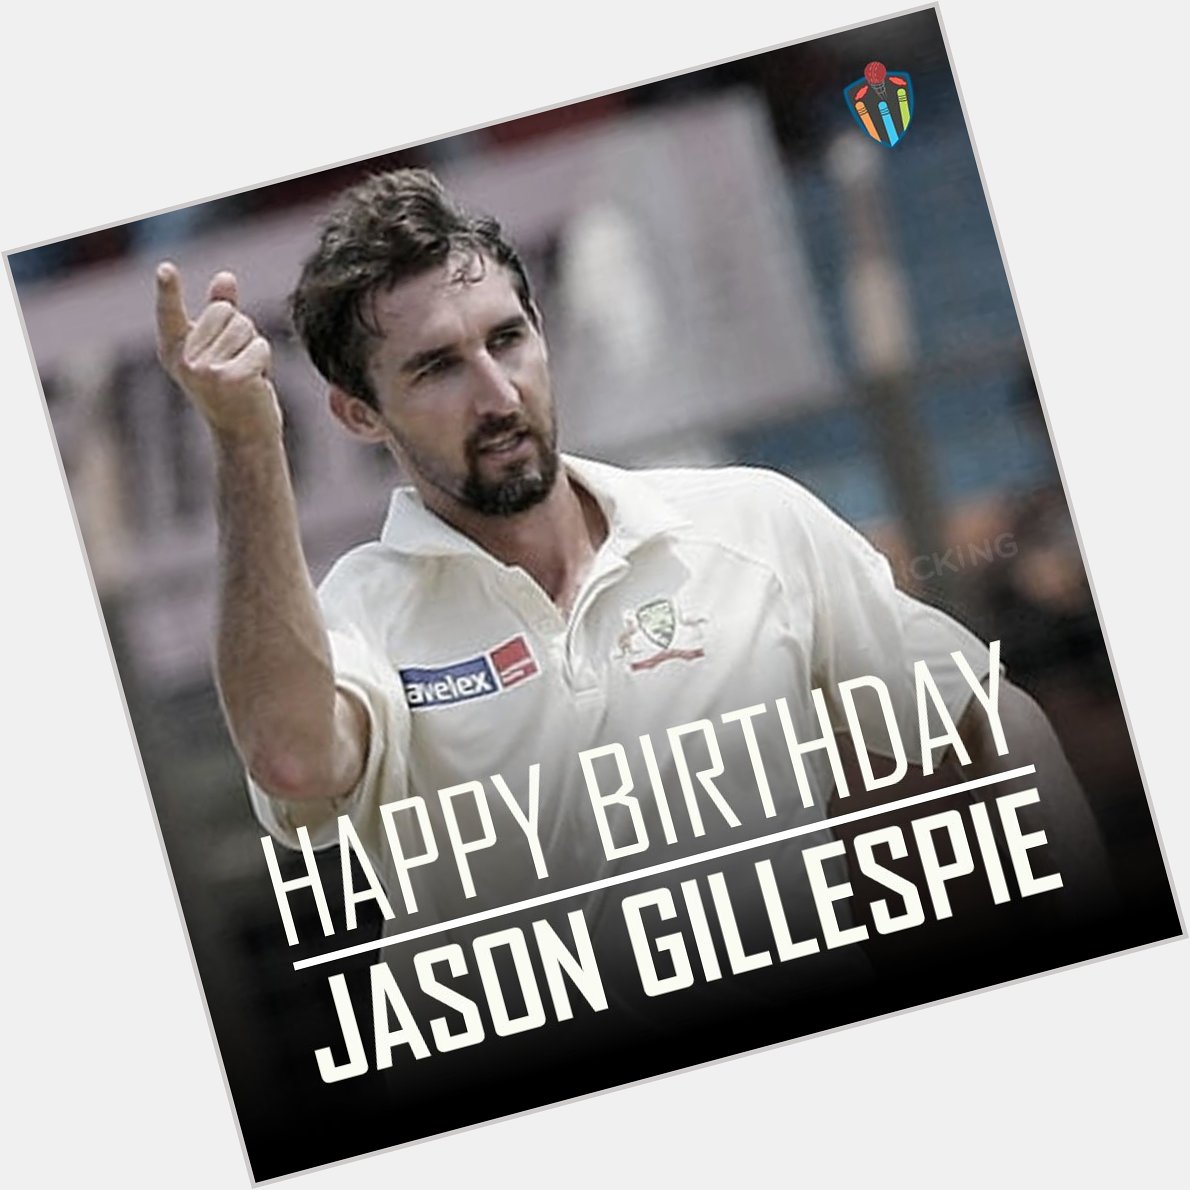 Happy Birthday Jason Gillespie. The Australian cricketer turns 42 today. 